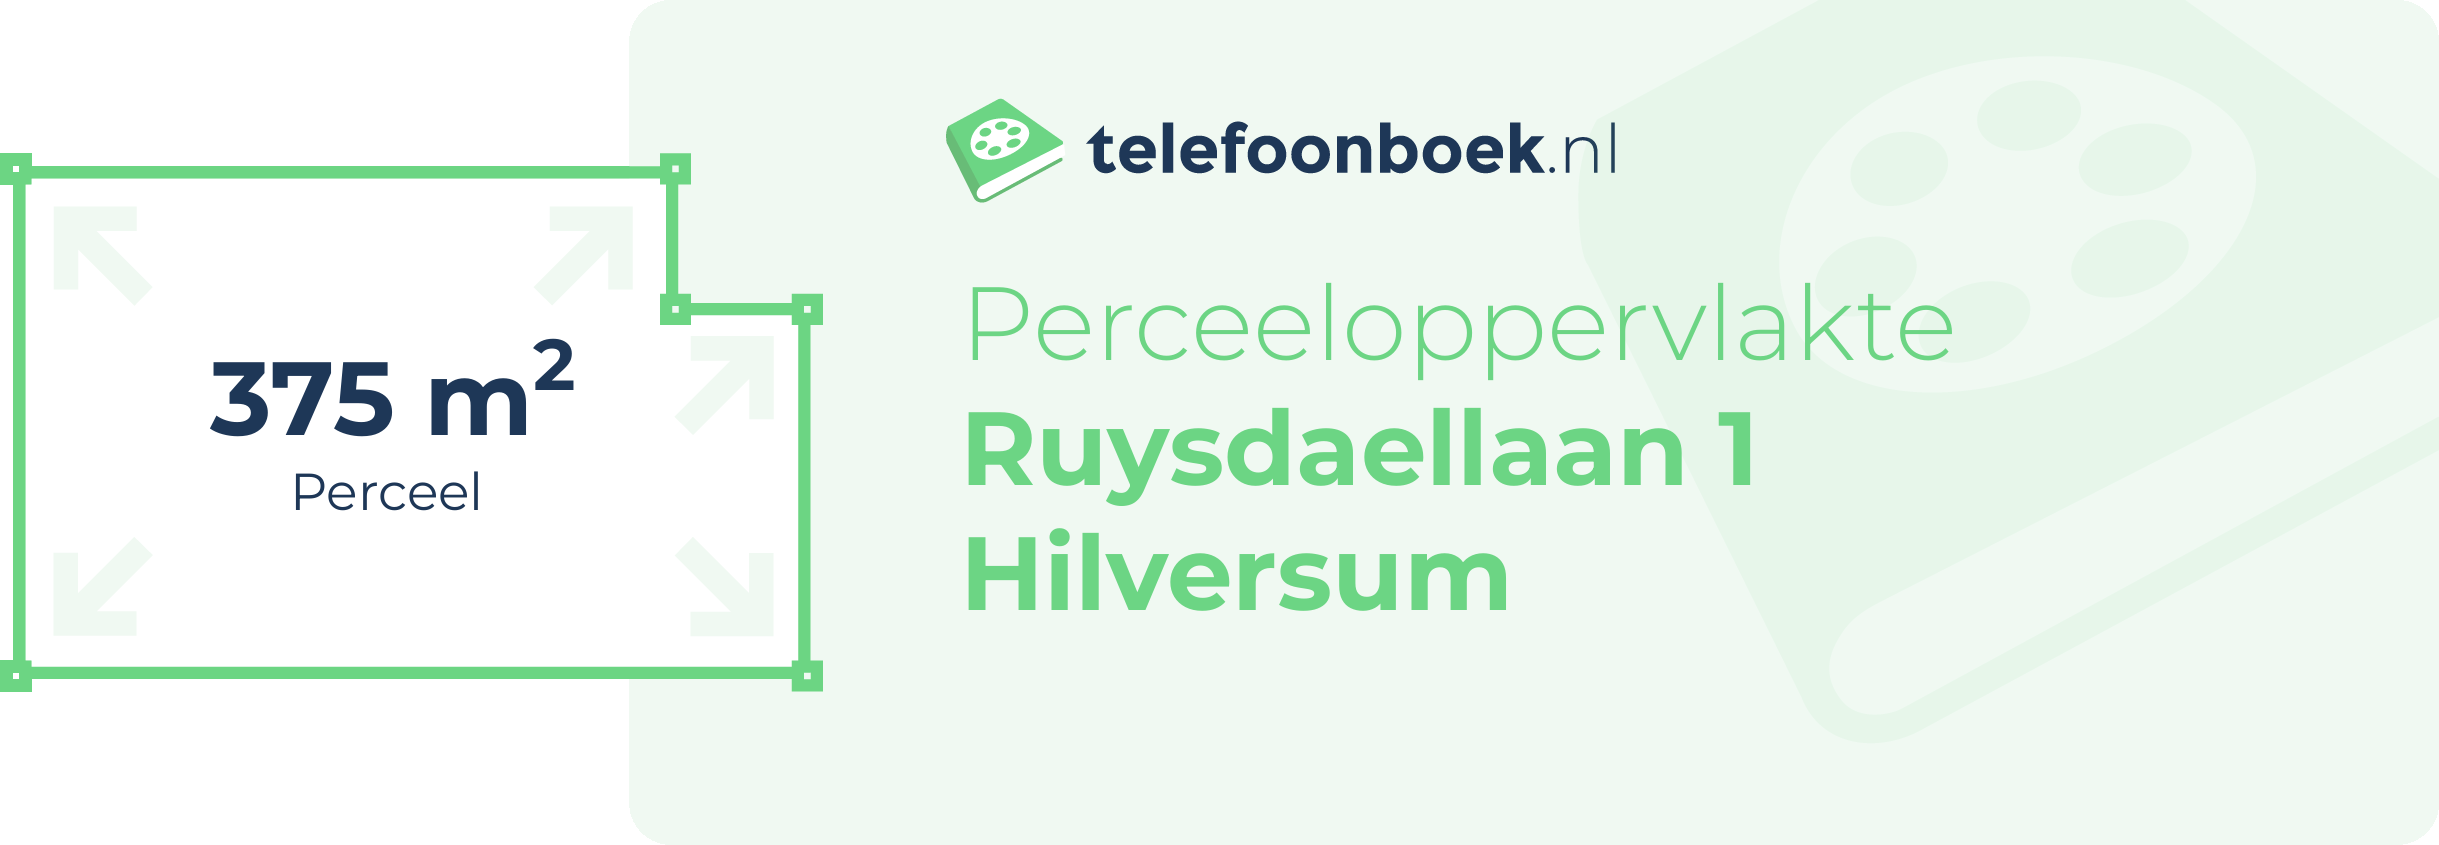 Perceeloppervlakte Ruysdaellaan 1 Hilversum